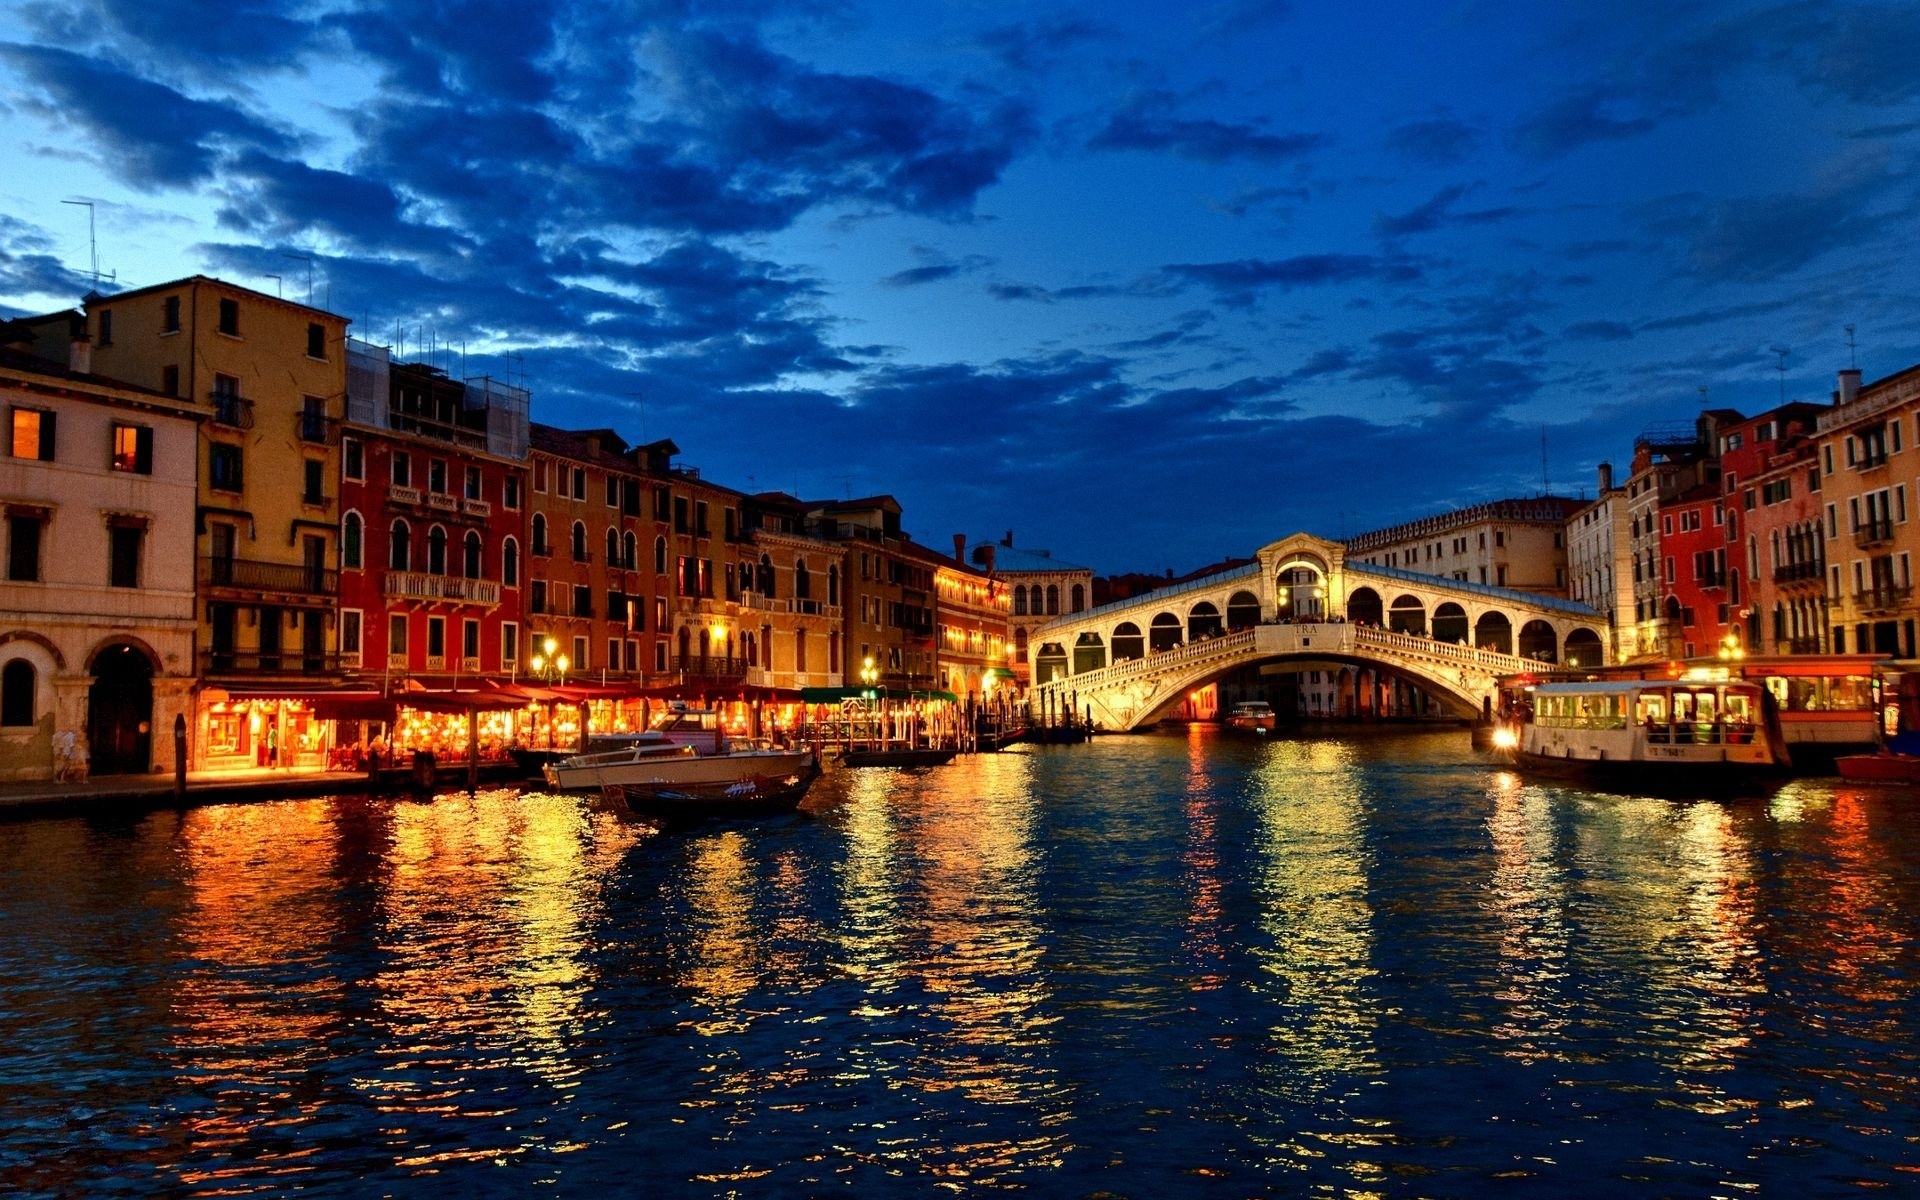 For Your Desktop Pictures The Bridge In Venice